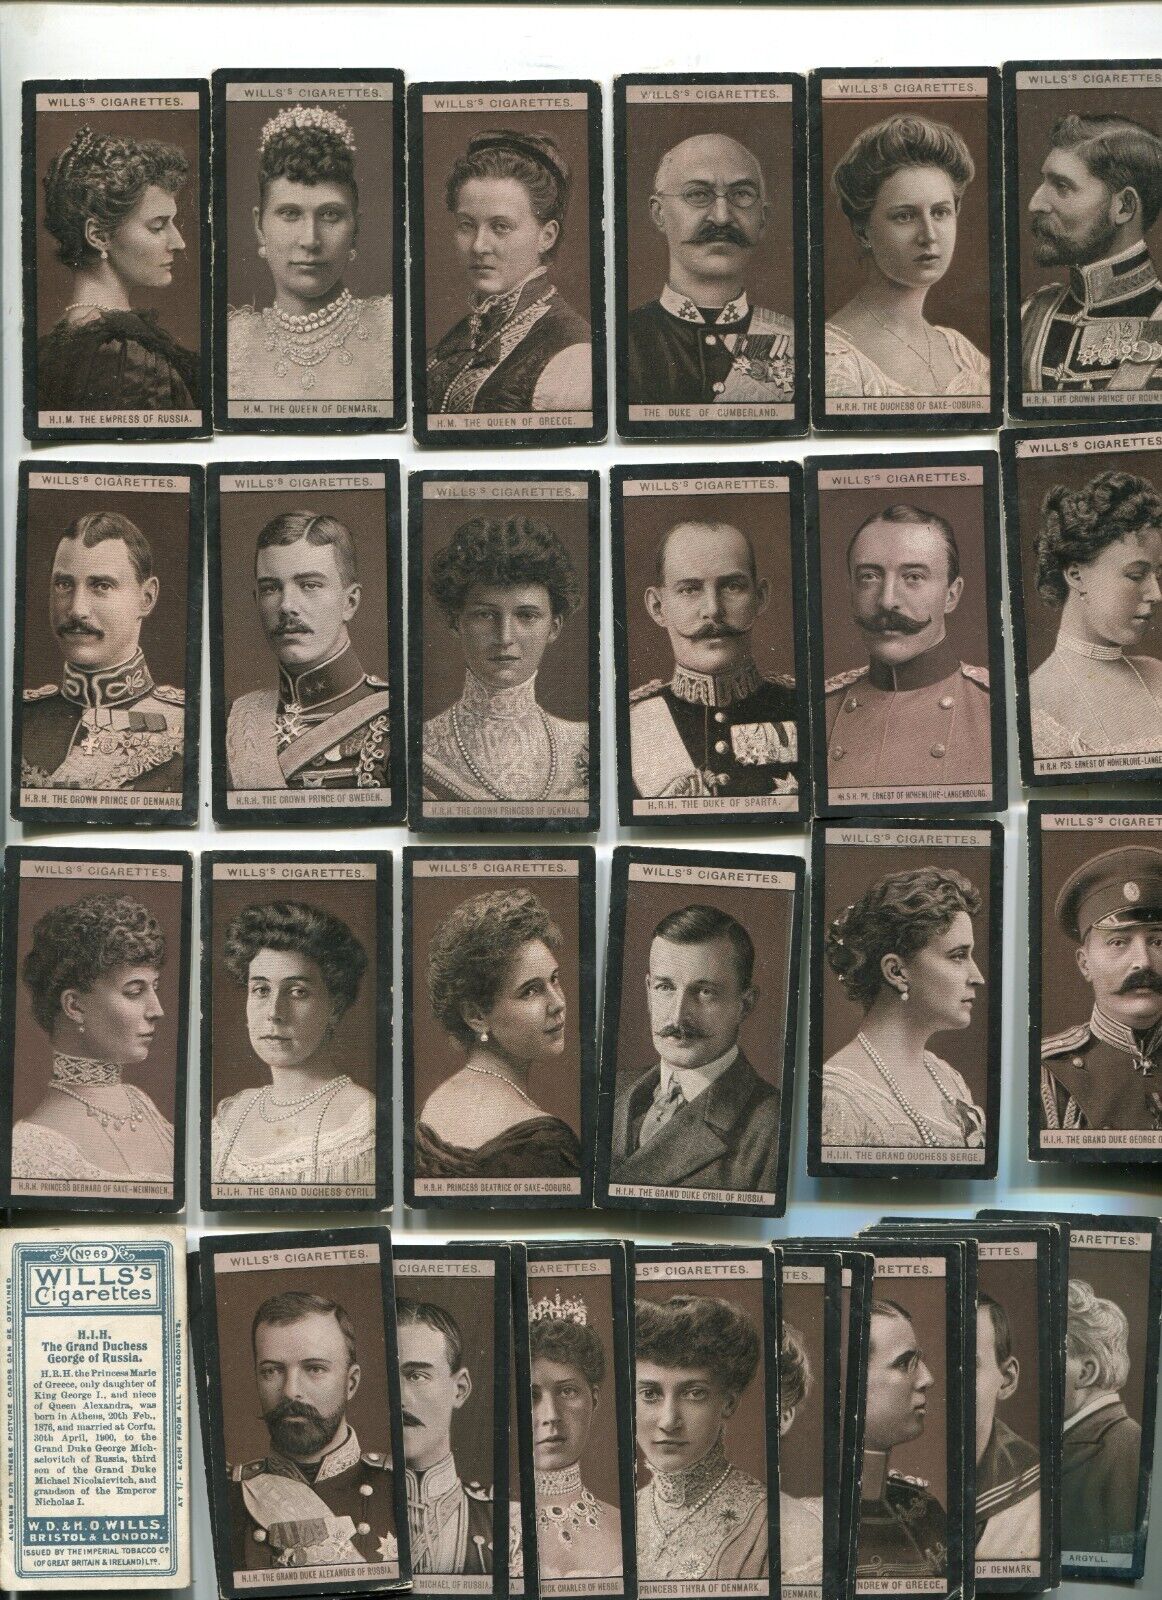 1908 W.O. & H.O WILLS CIGARETTES SERIES 2 PORTRAITS OF EUROPEAN ROYALTY CARD SET